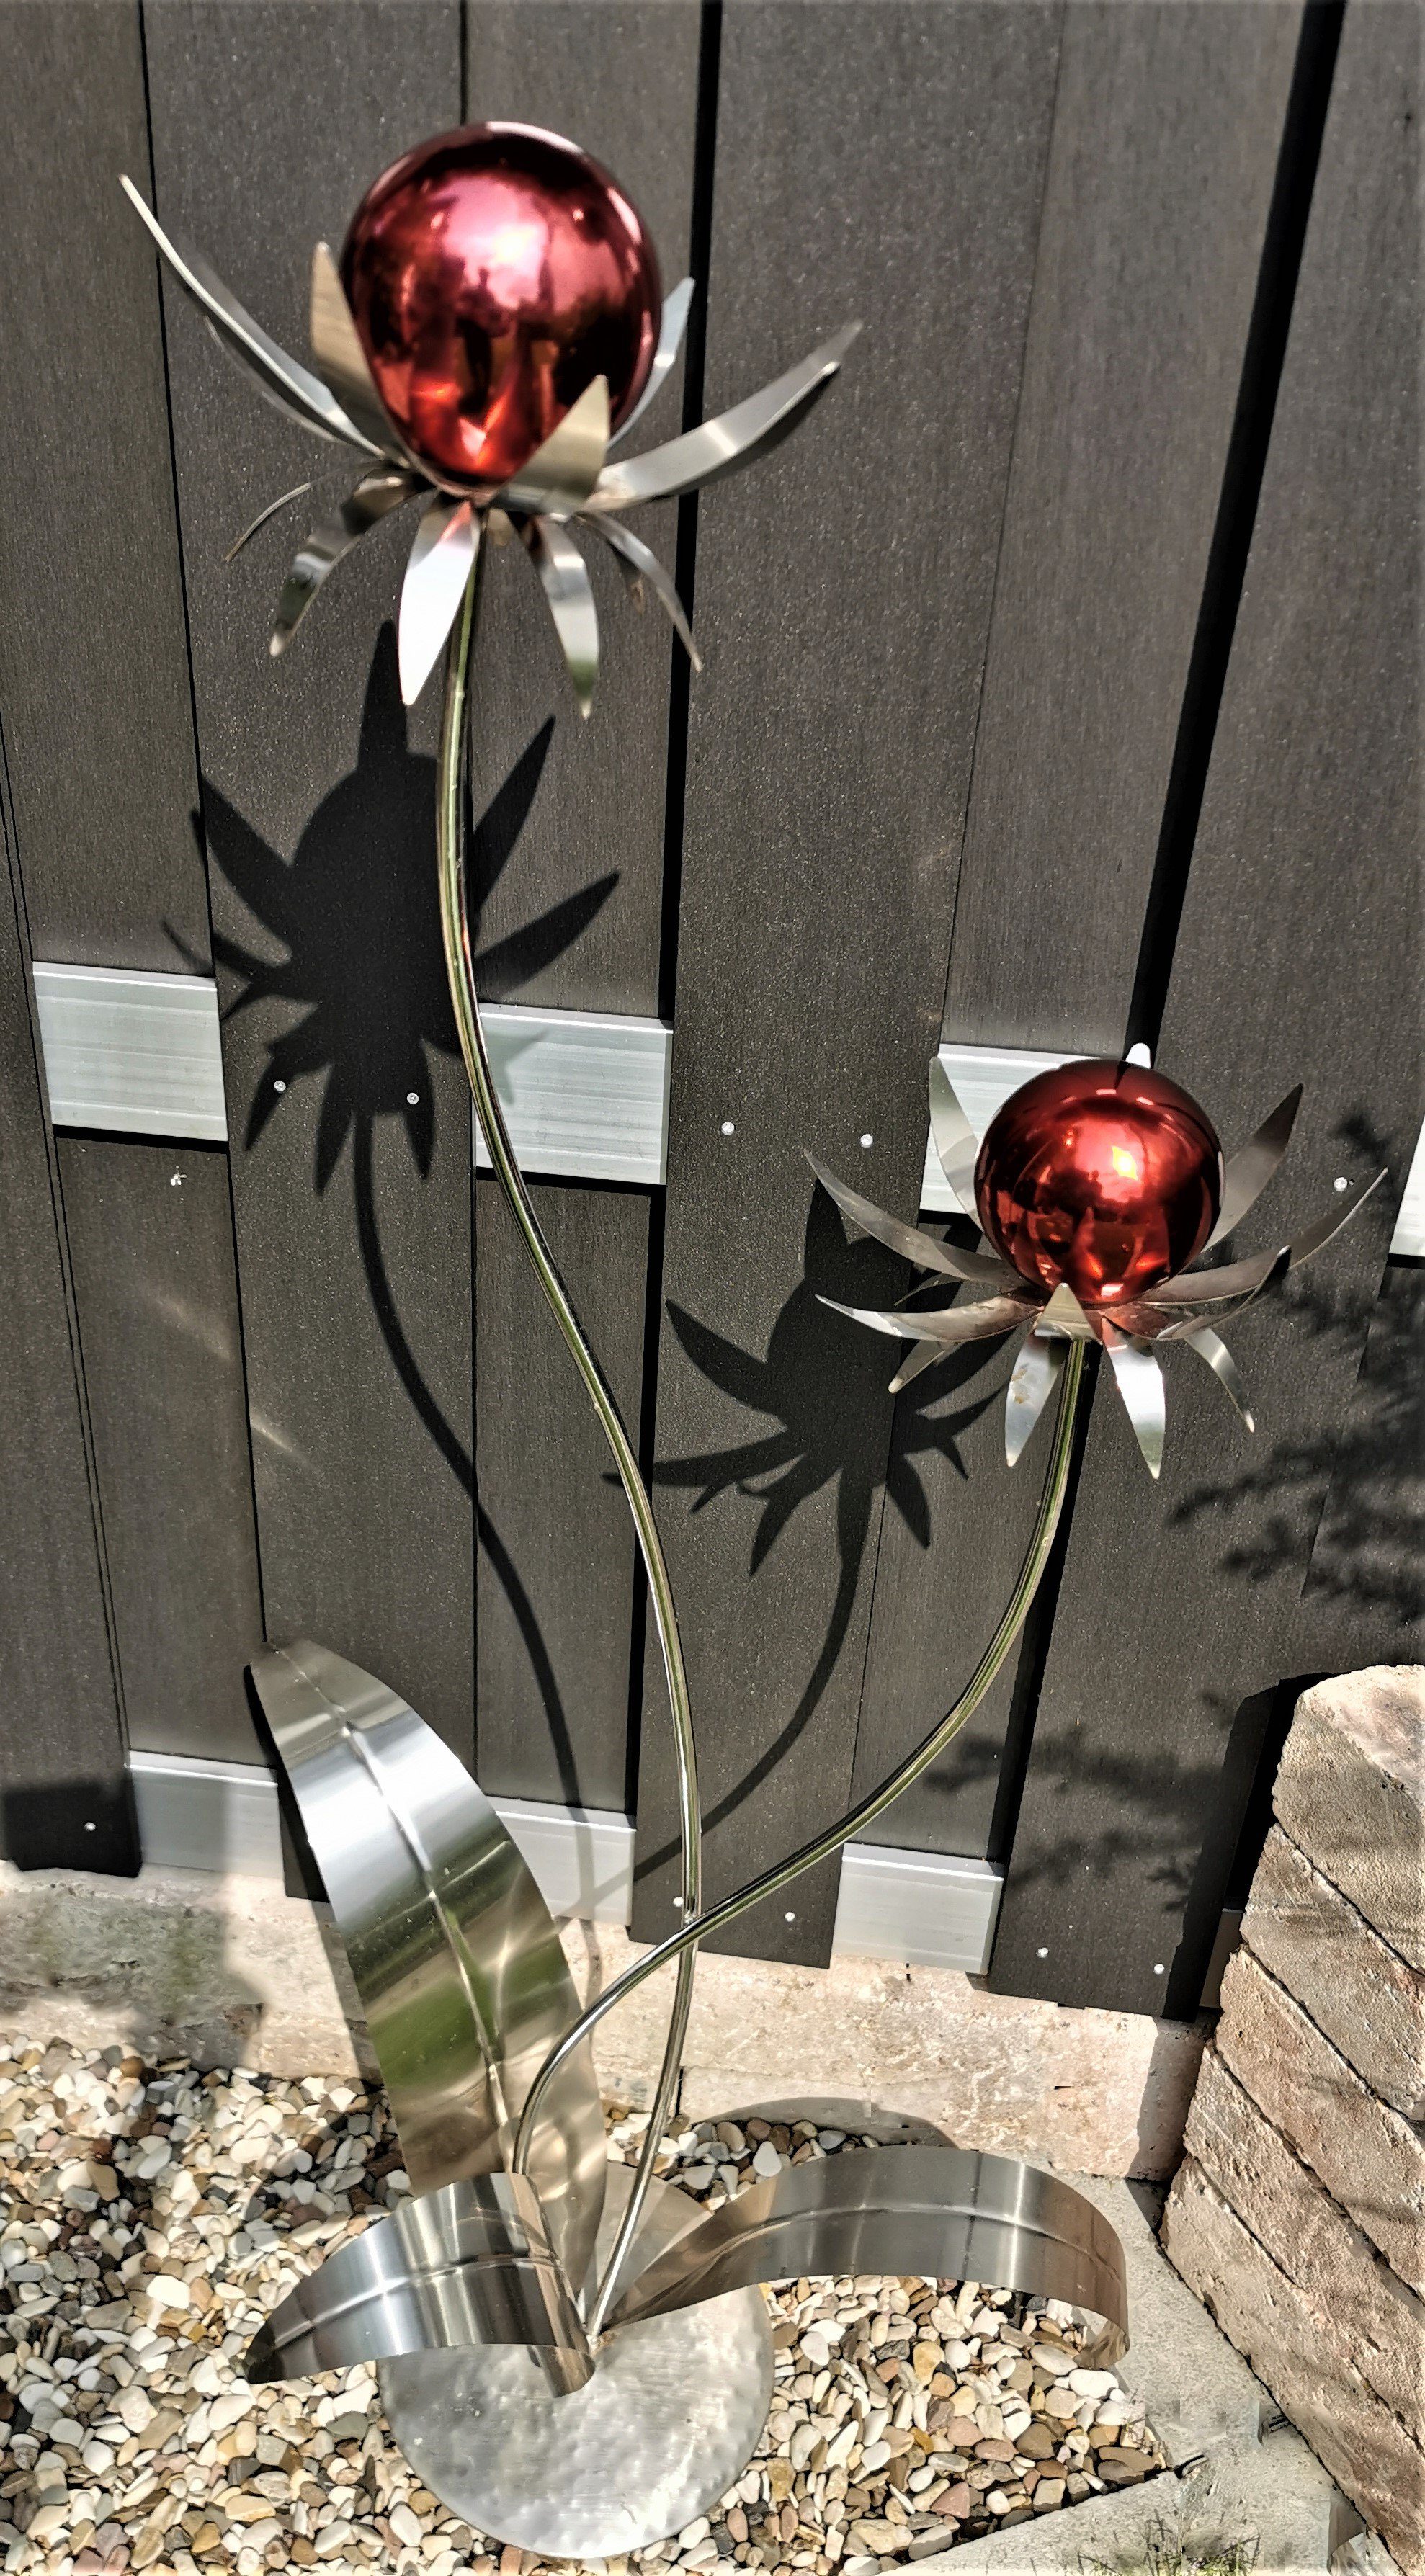 Jürgen Bocker Garten-Ambiente Gartenstecker Skulptur Blume Milano Edelstahl 120 cm Kugel rot poliert Standfuß Gartendeko